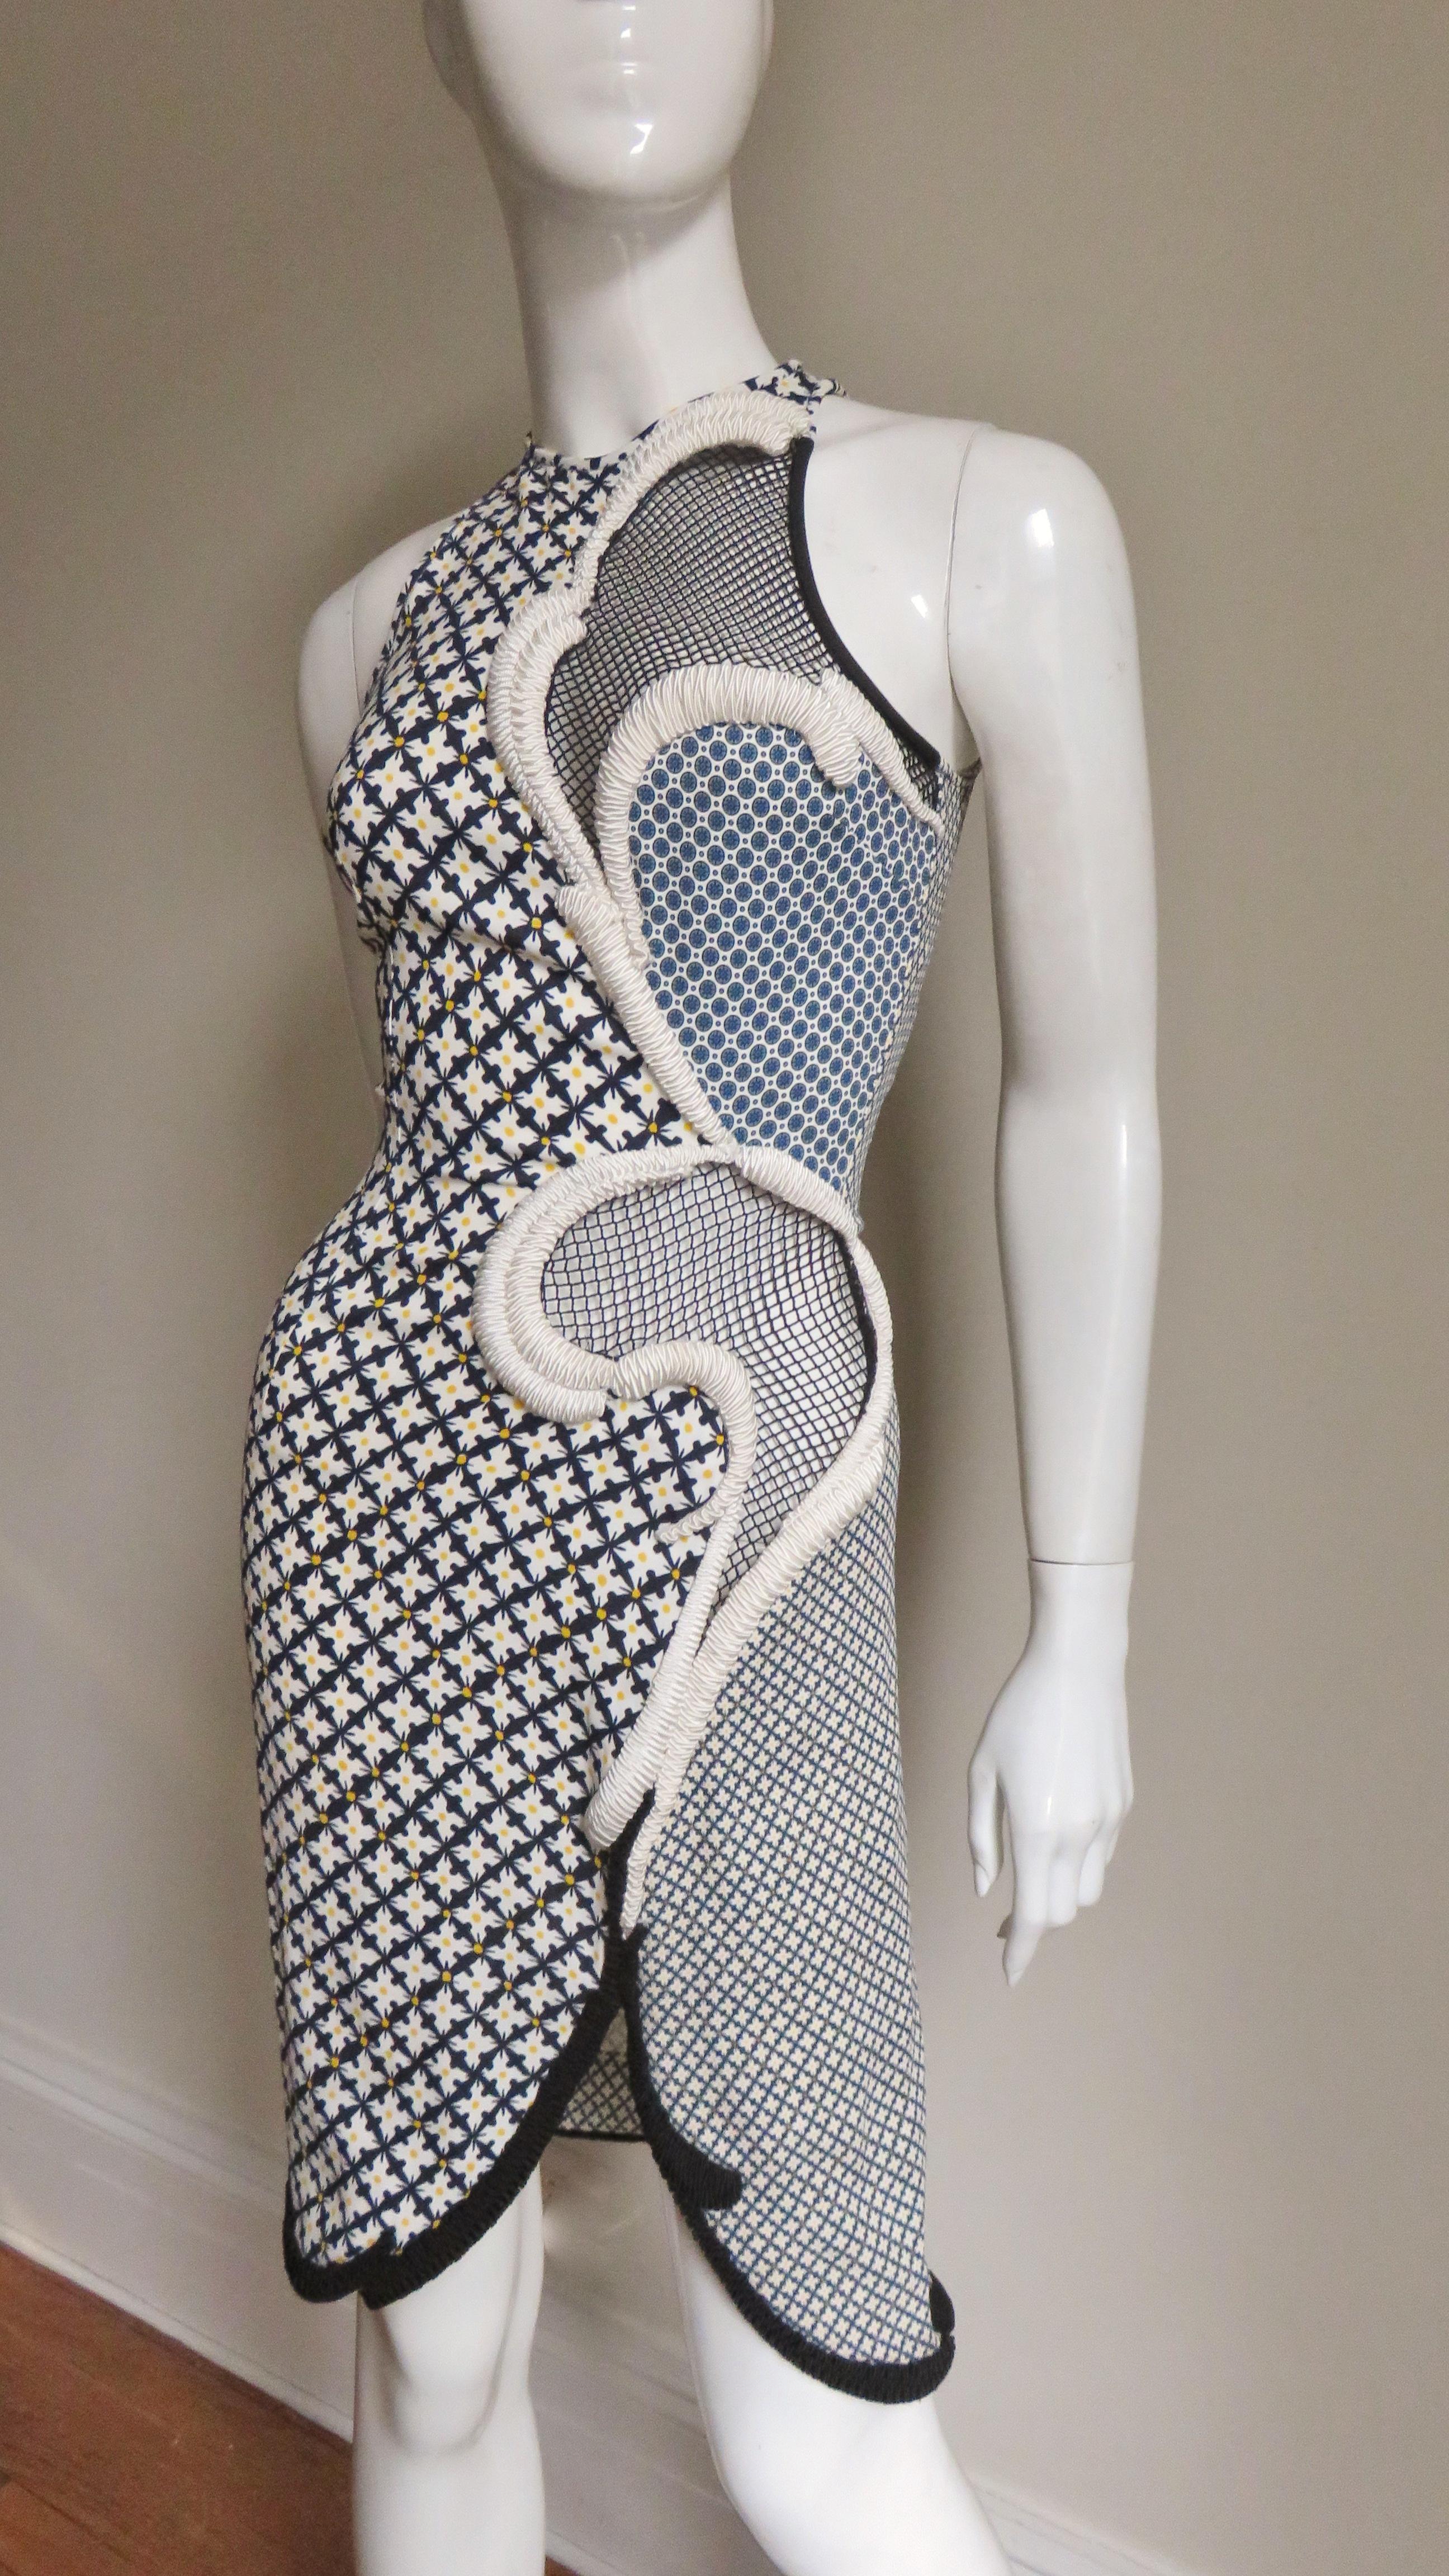 Gray Stella McCartney New Mixed Pattern Ad Campaign Cut out Dress